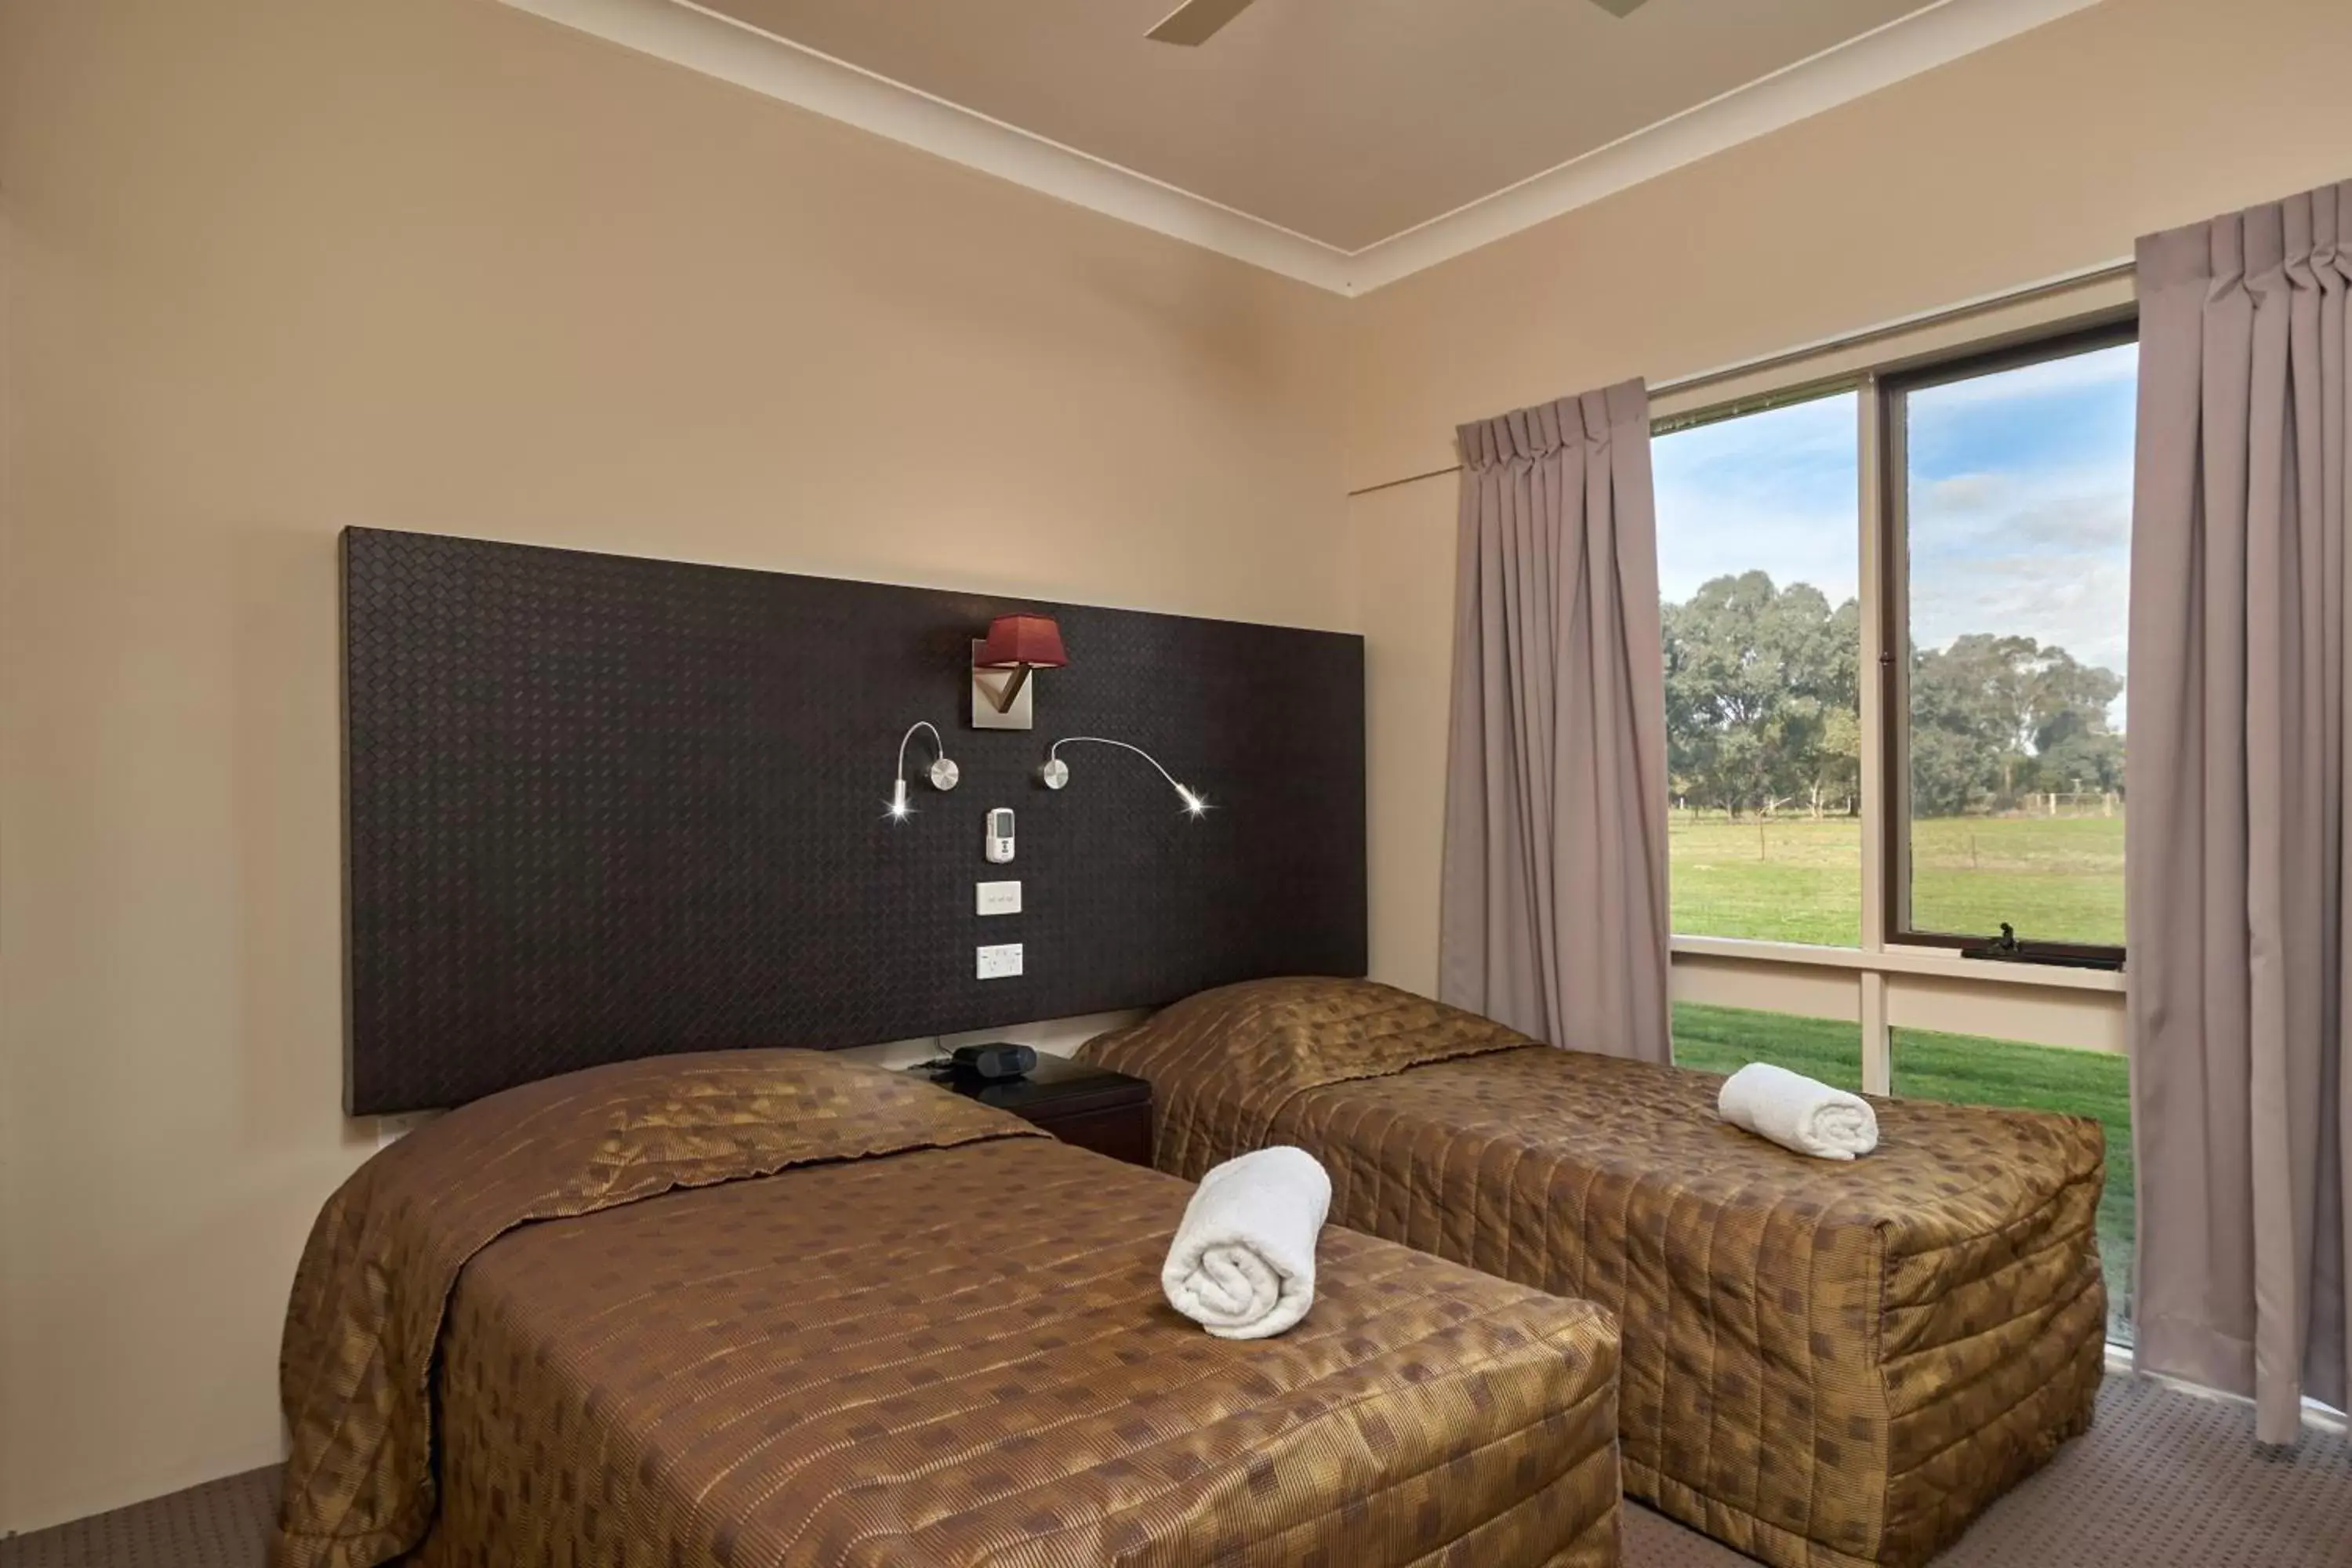 Bed, Room Photo in Australian Homestead Motor Lodge